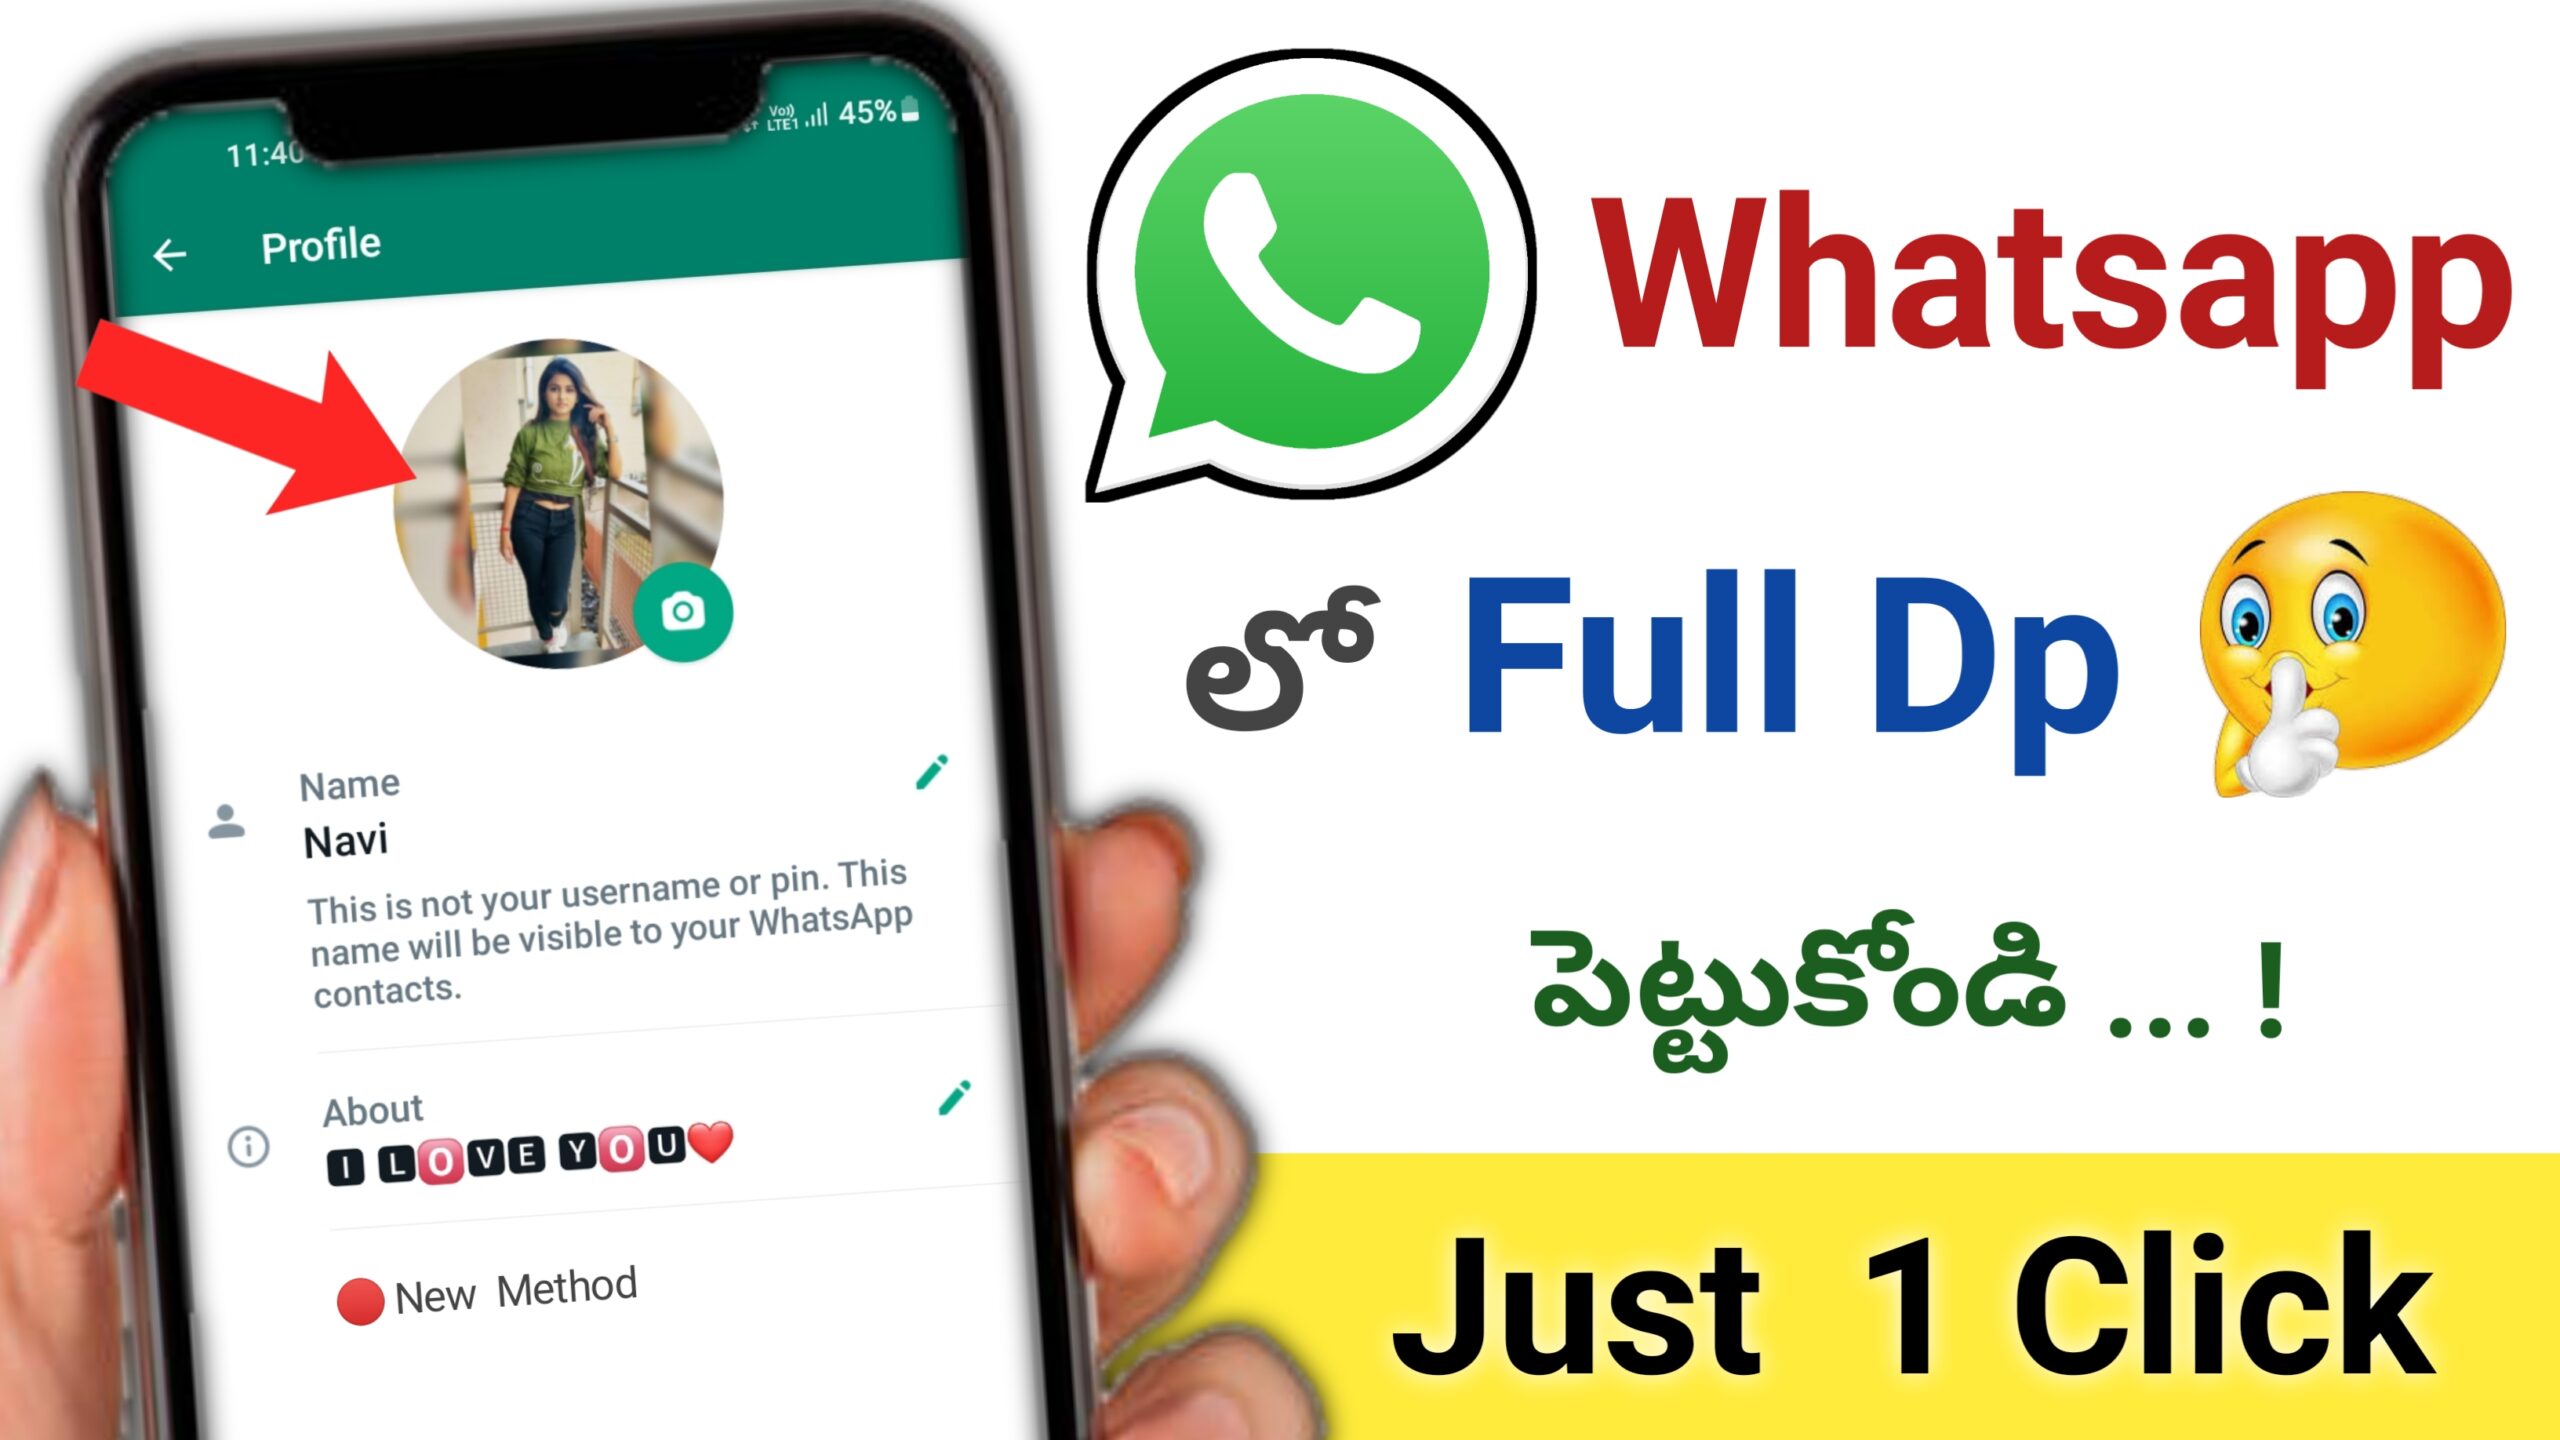 Whatsapp DP : All Types Whatsapp DP